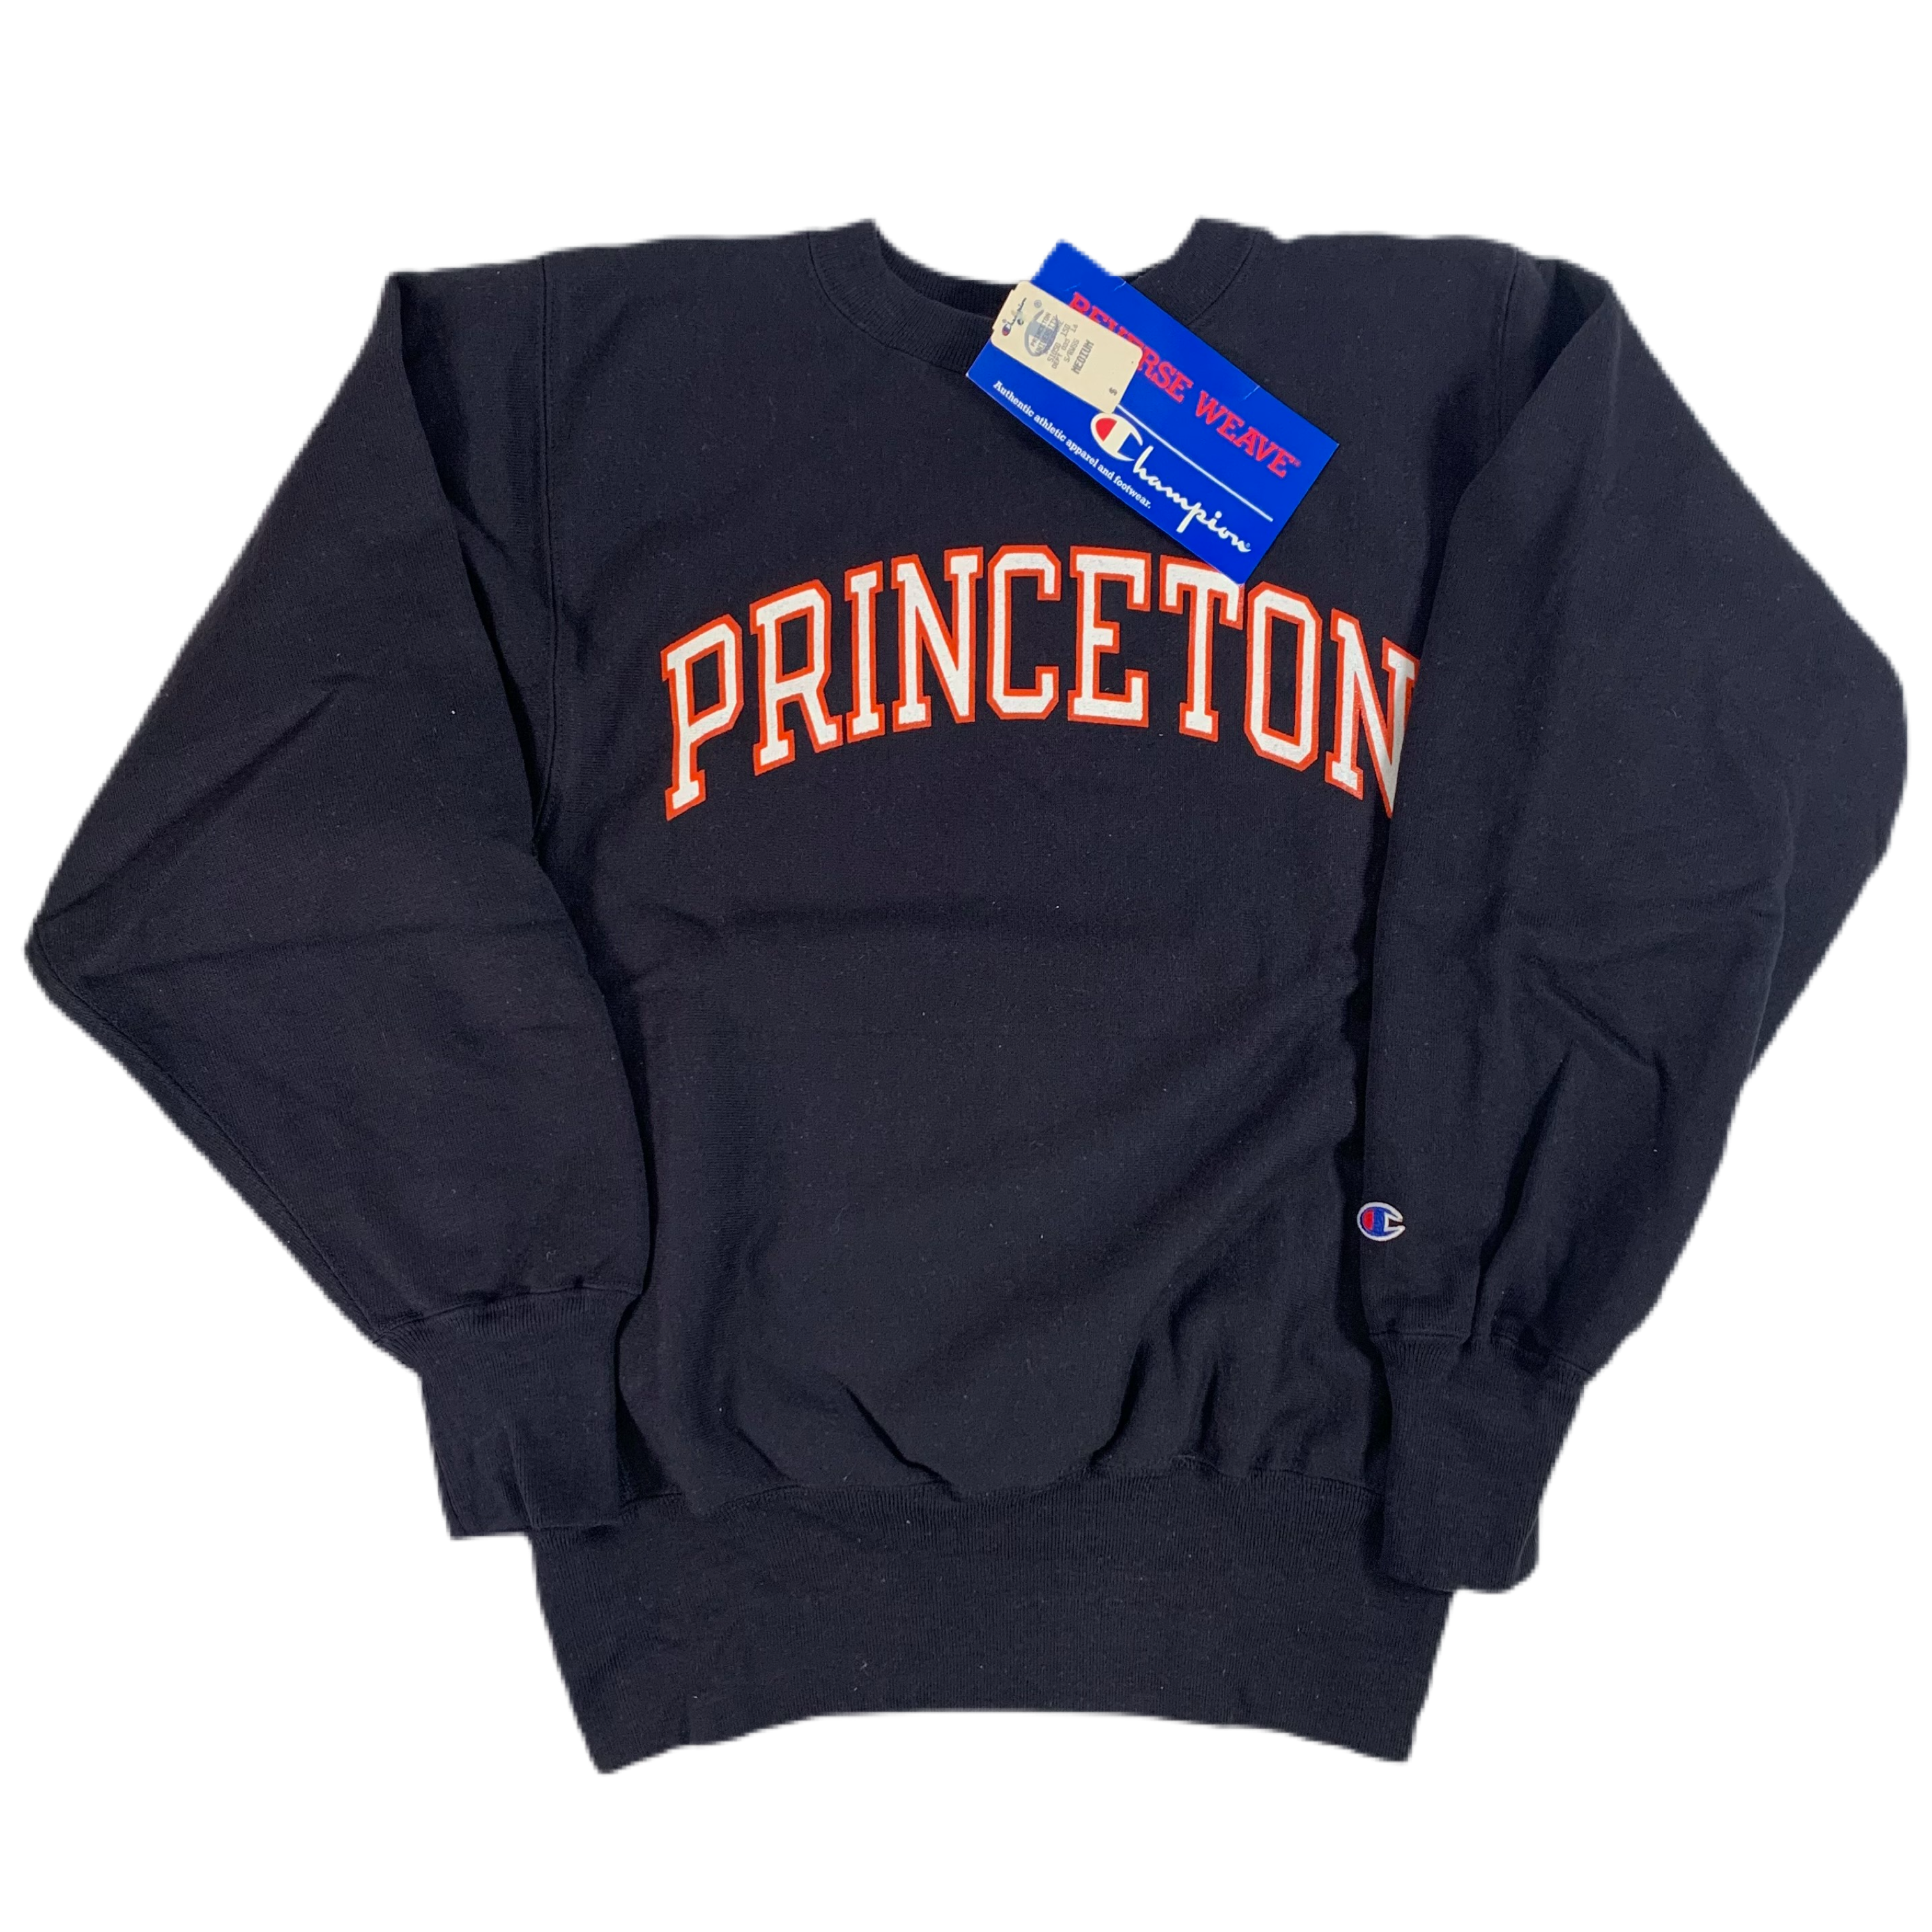 Vintage Princeton Champion 